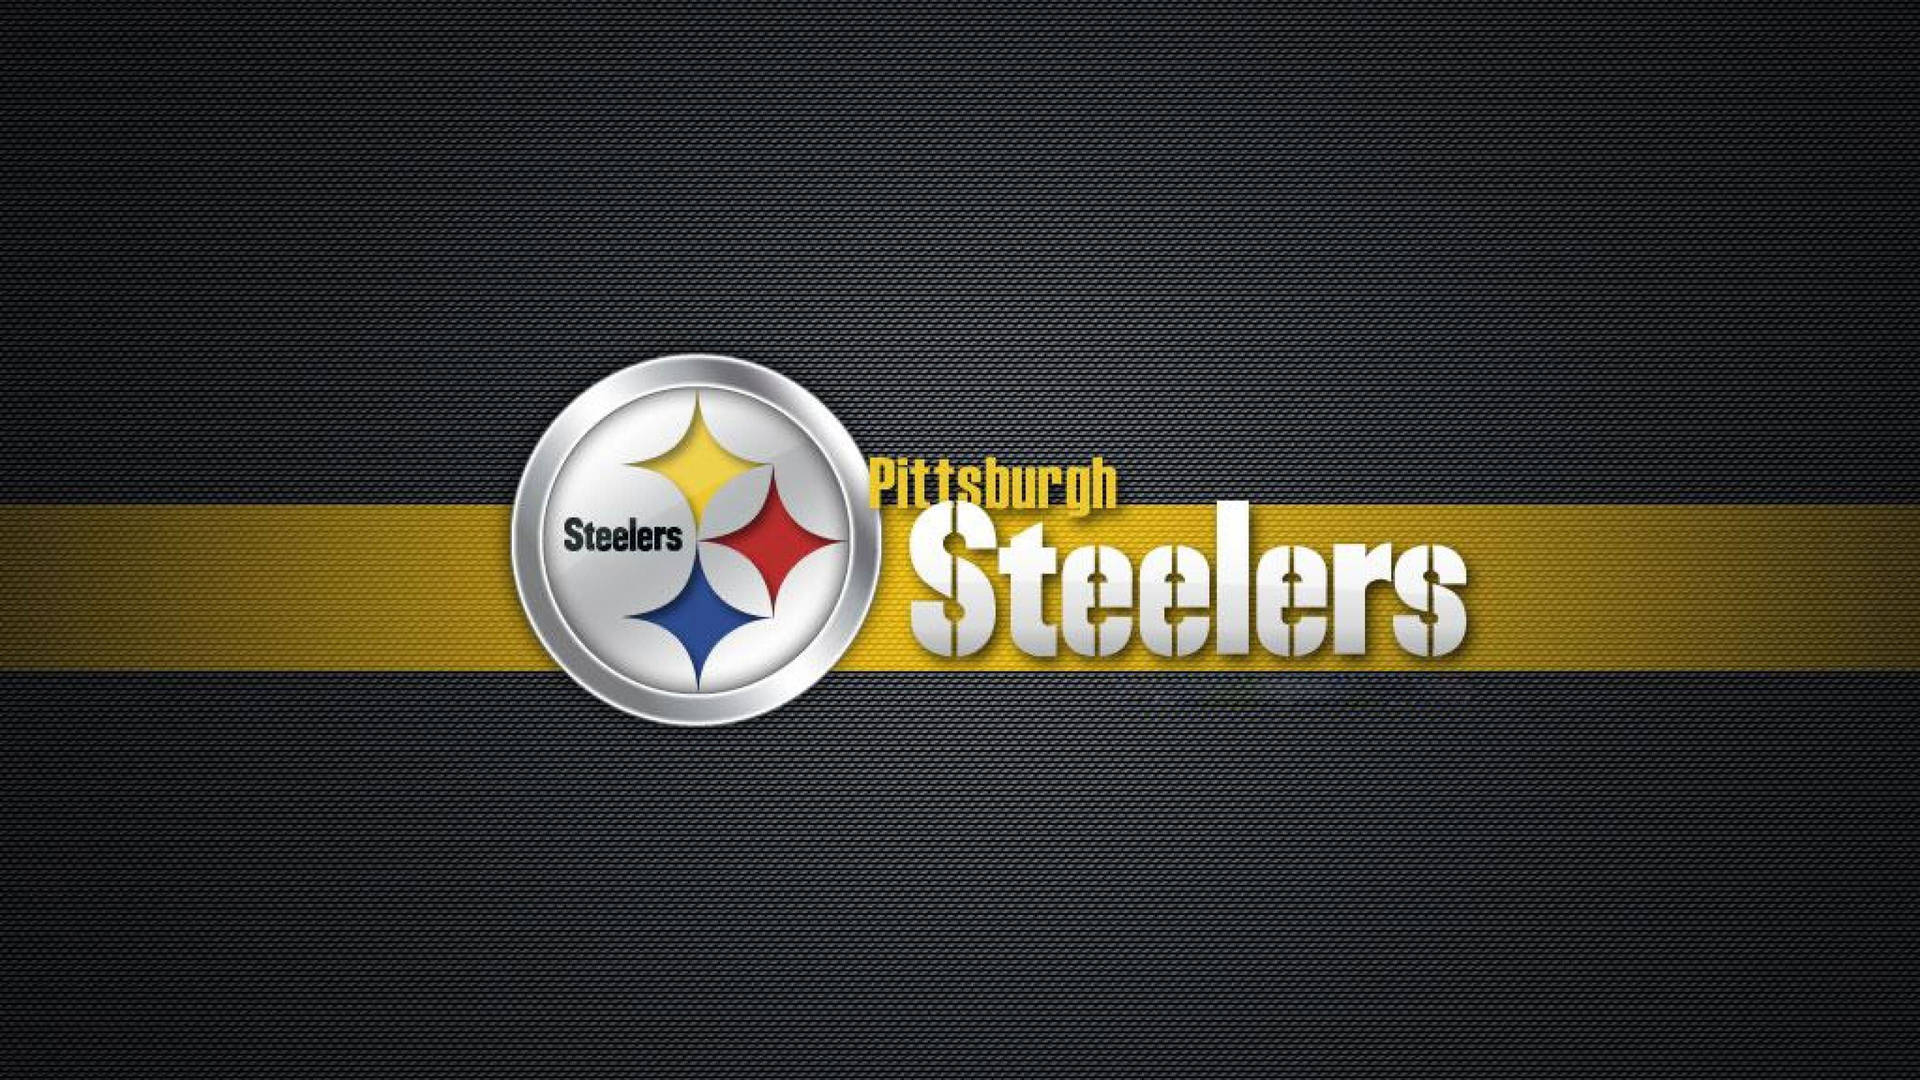 Pittsburgh Steelers NFL Football Poster Wallpaper